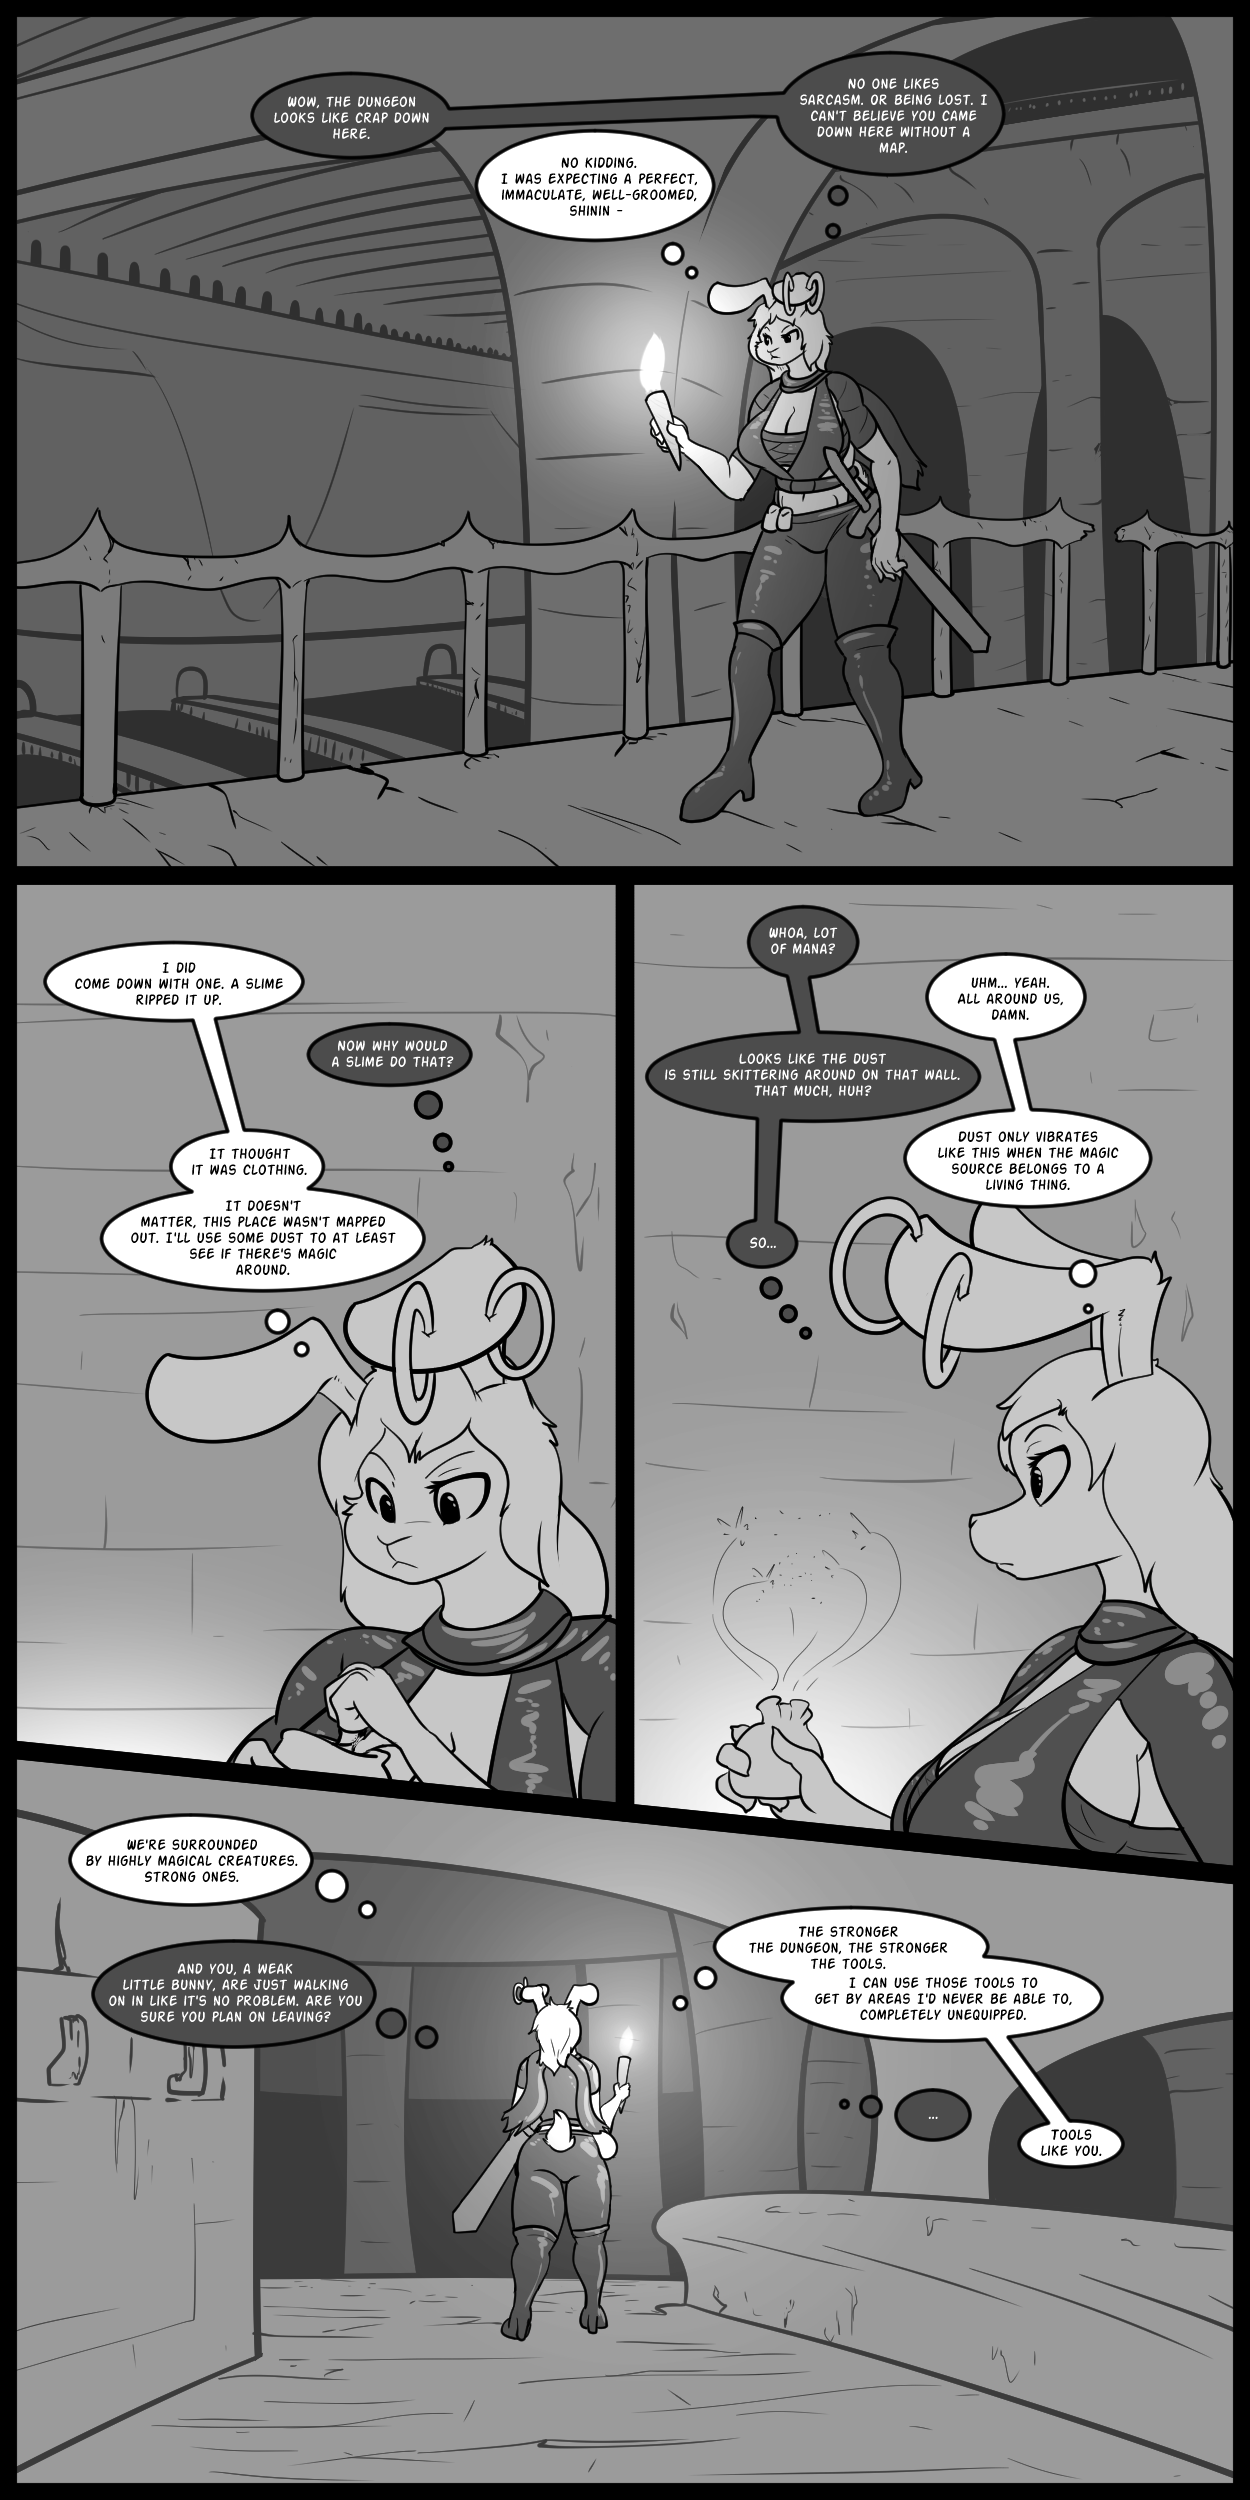 A rough situation bunny anthro porn comic